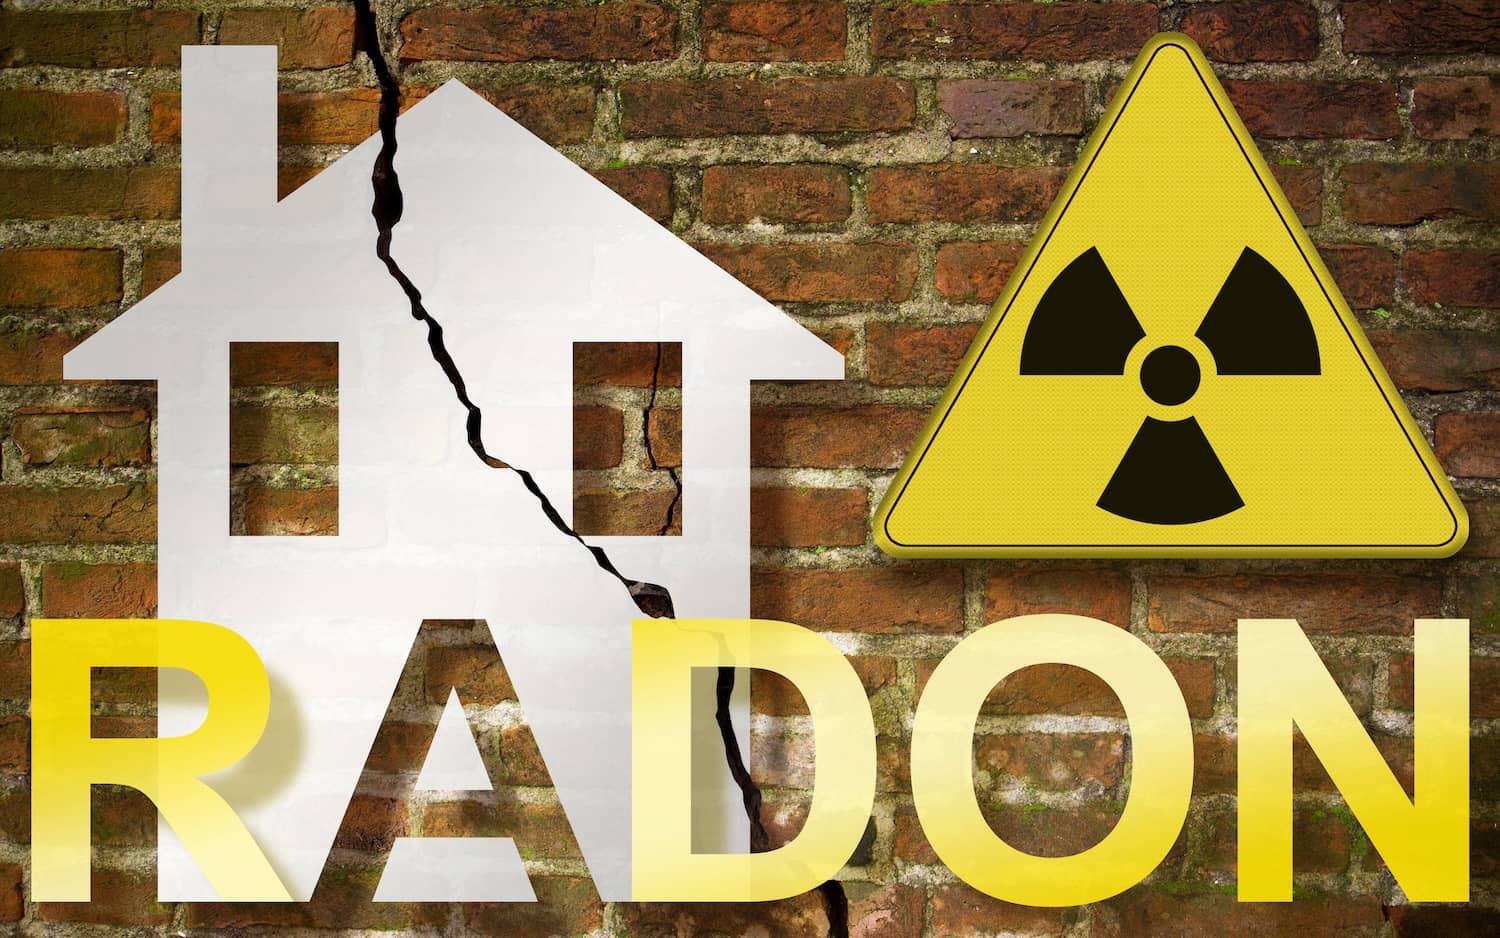 How does radon enter a home